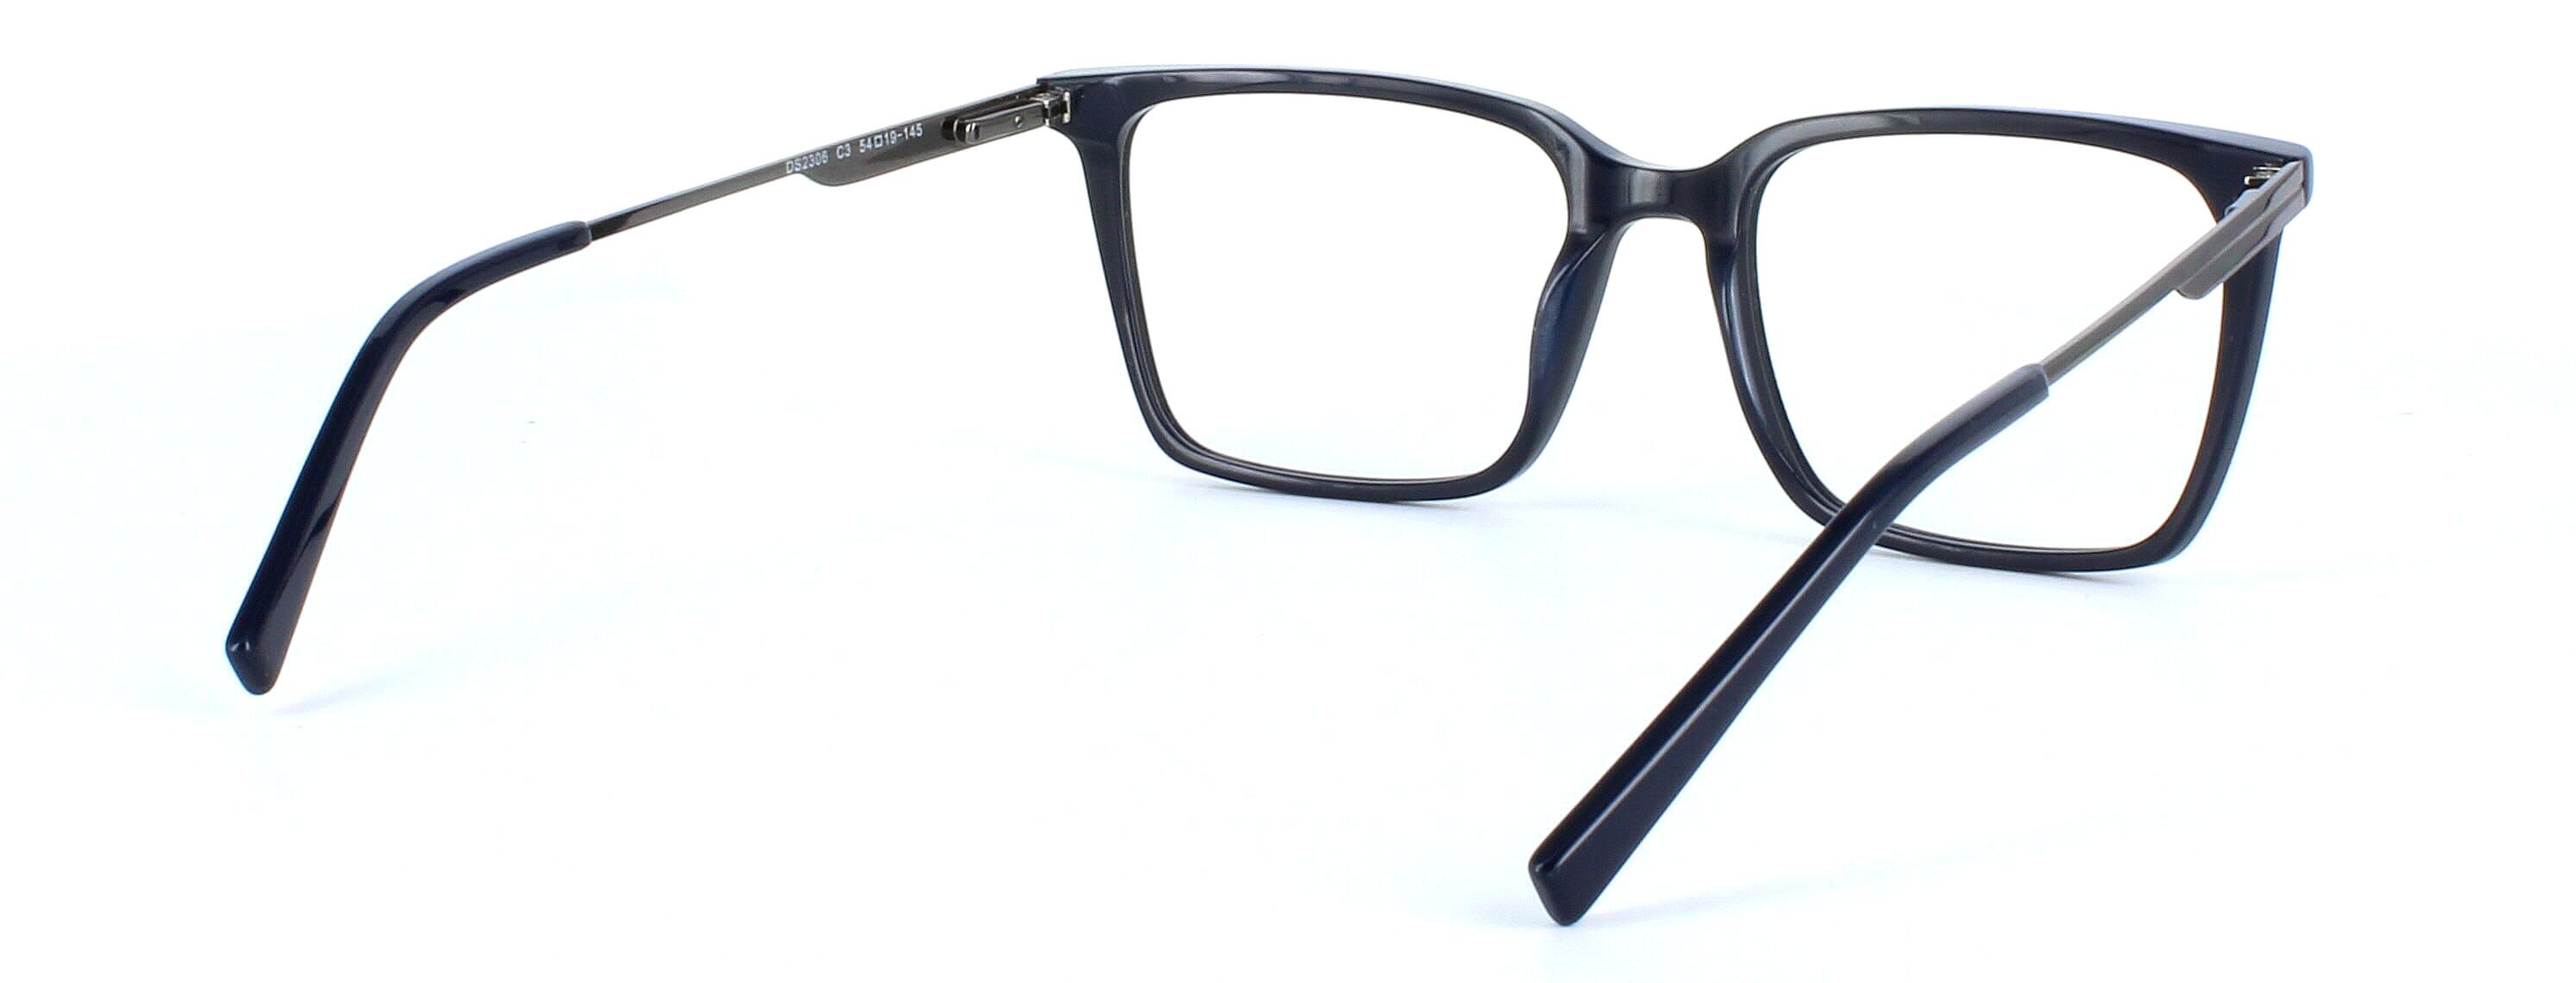 Hadlow - Gent's matt black acetate glasses frame with rectangular shaped lenses - image 4